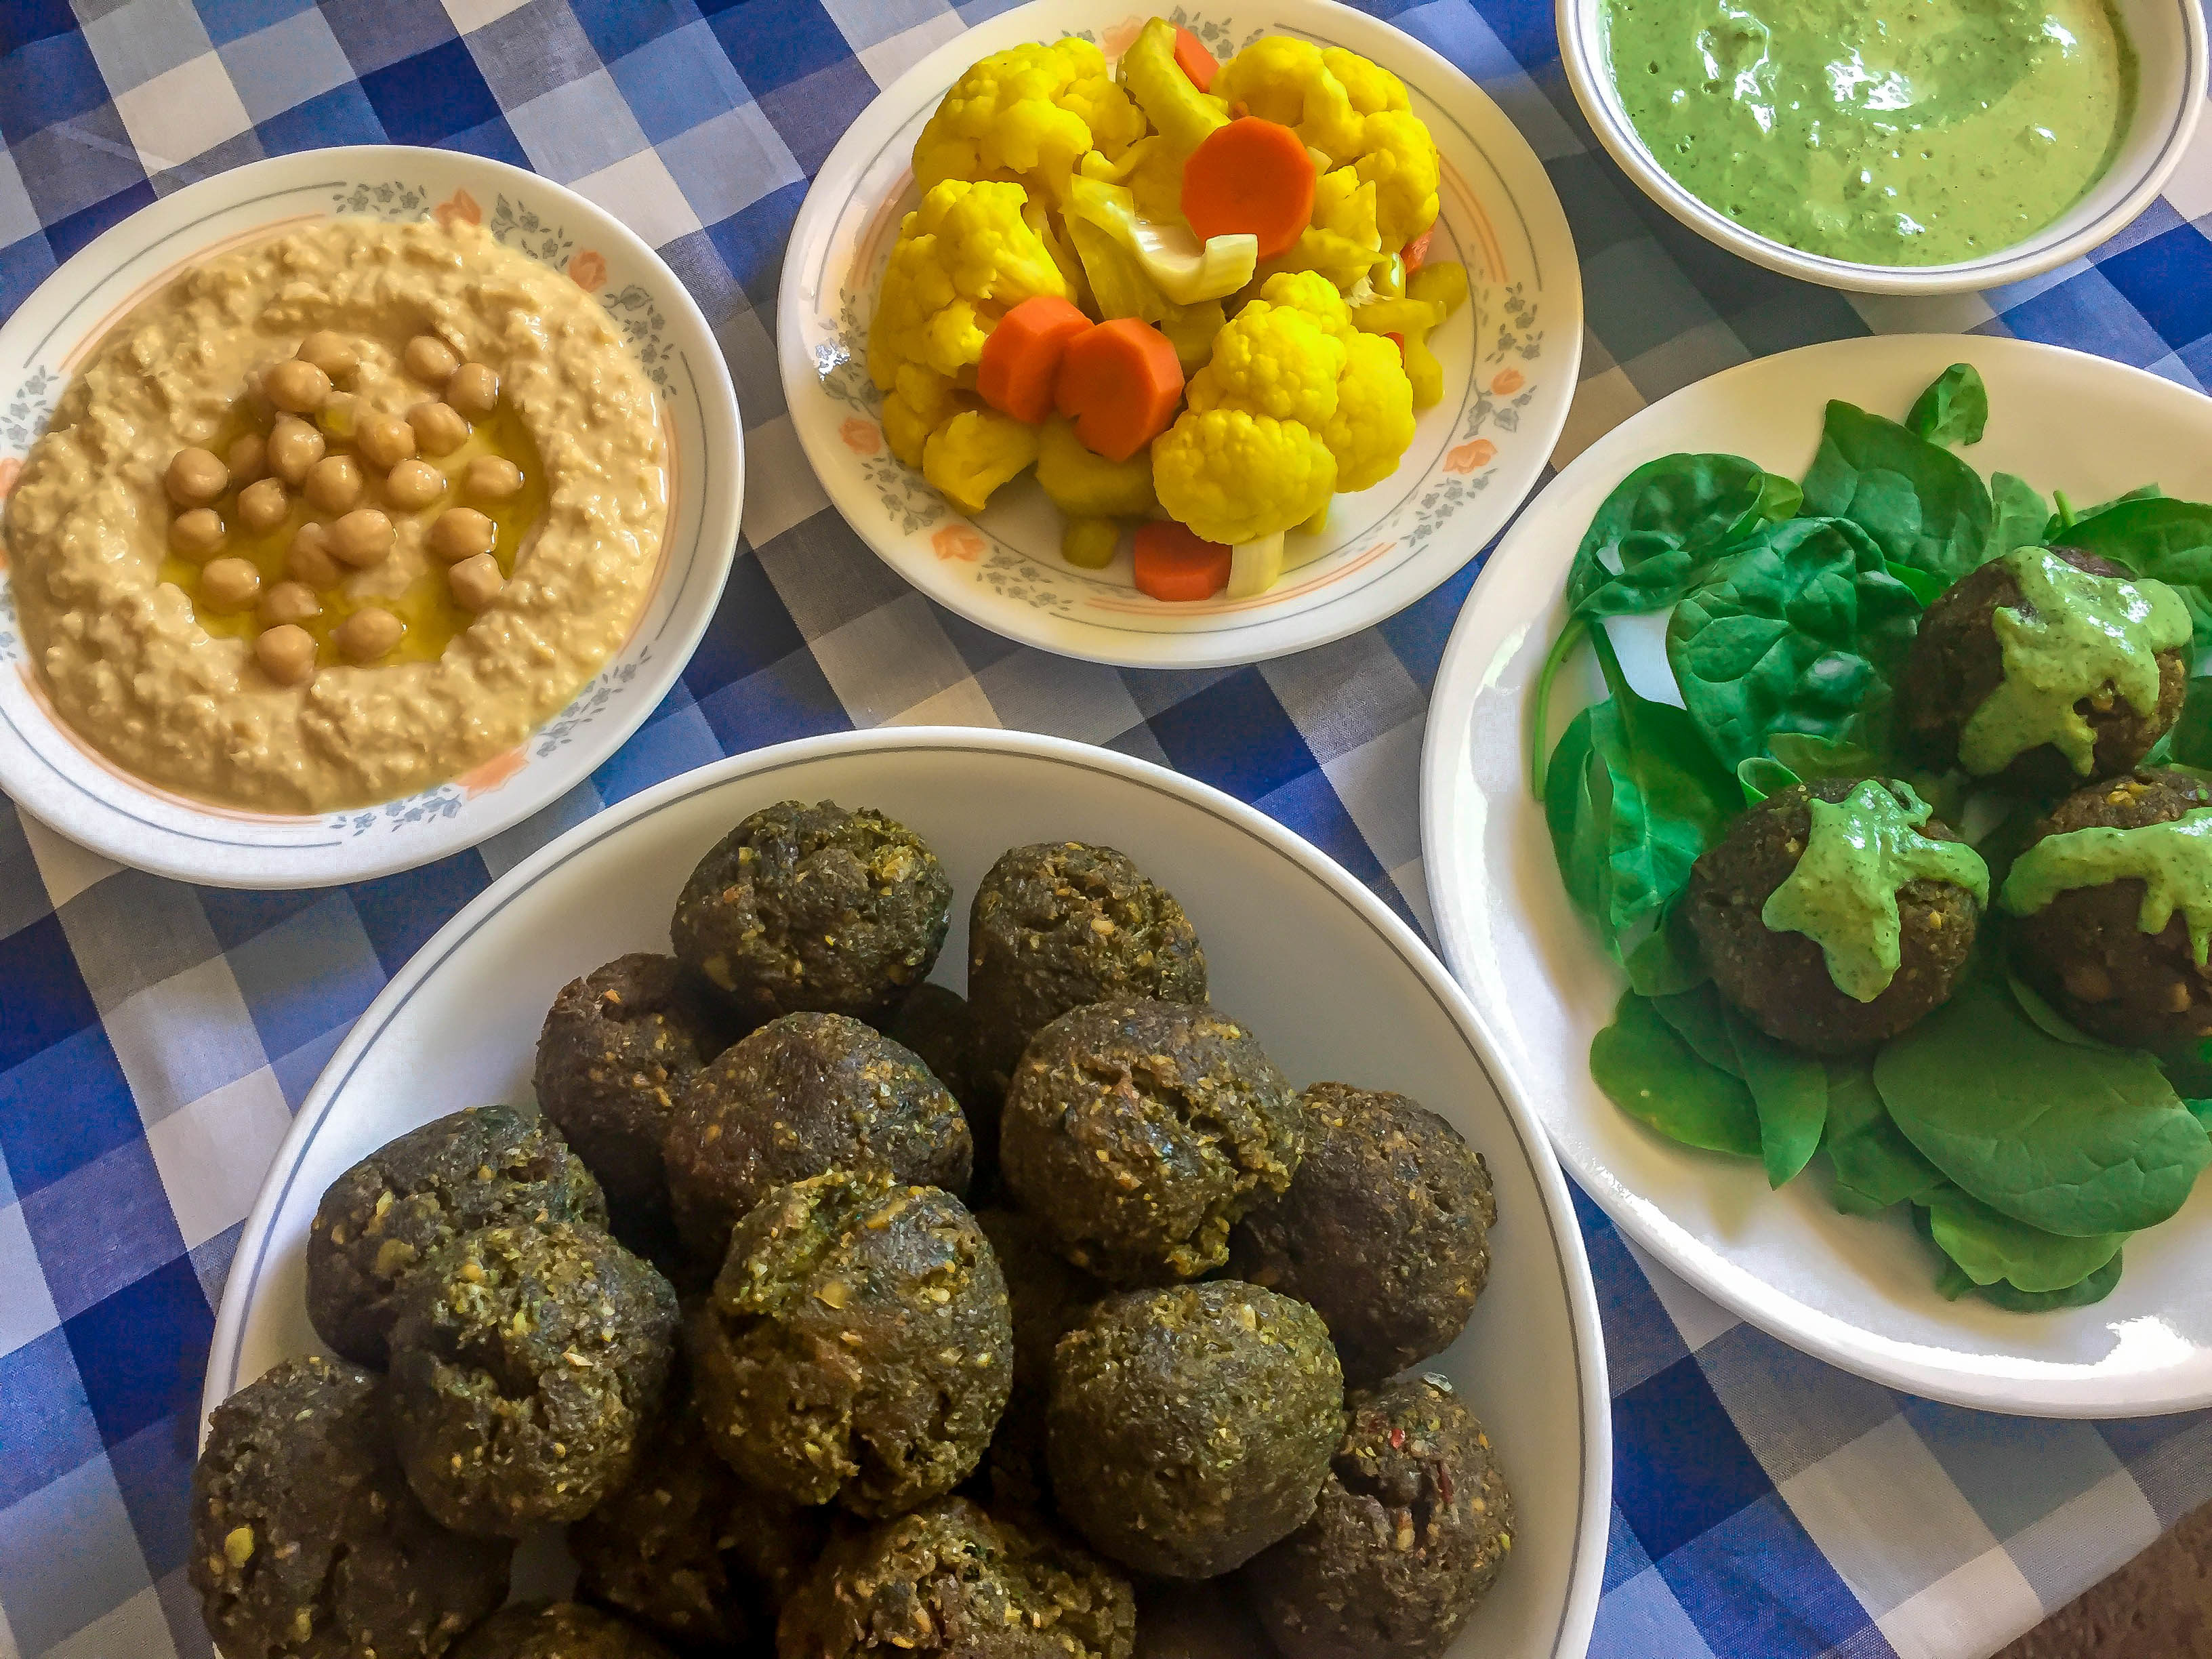 Falafel- The Healthiest Israeli Snack